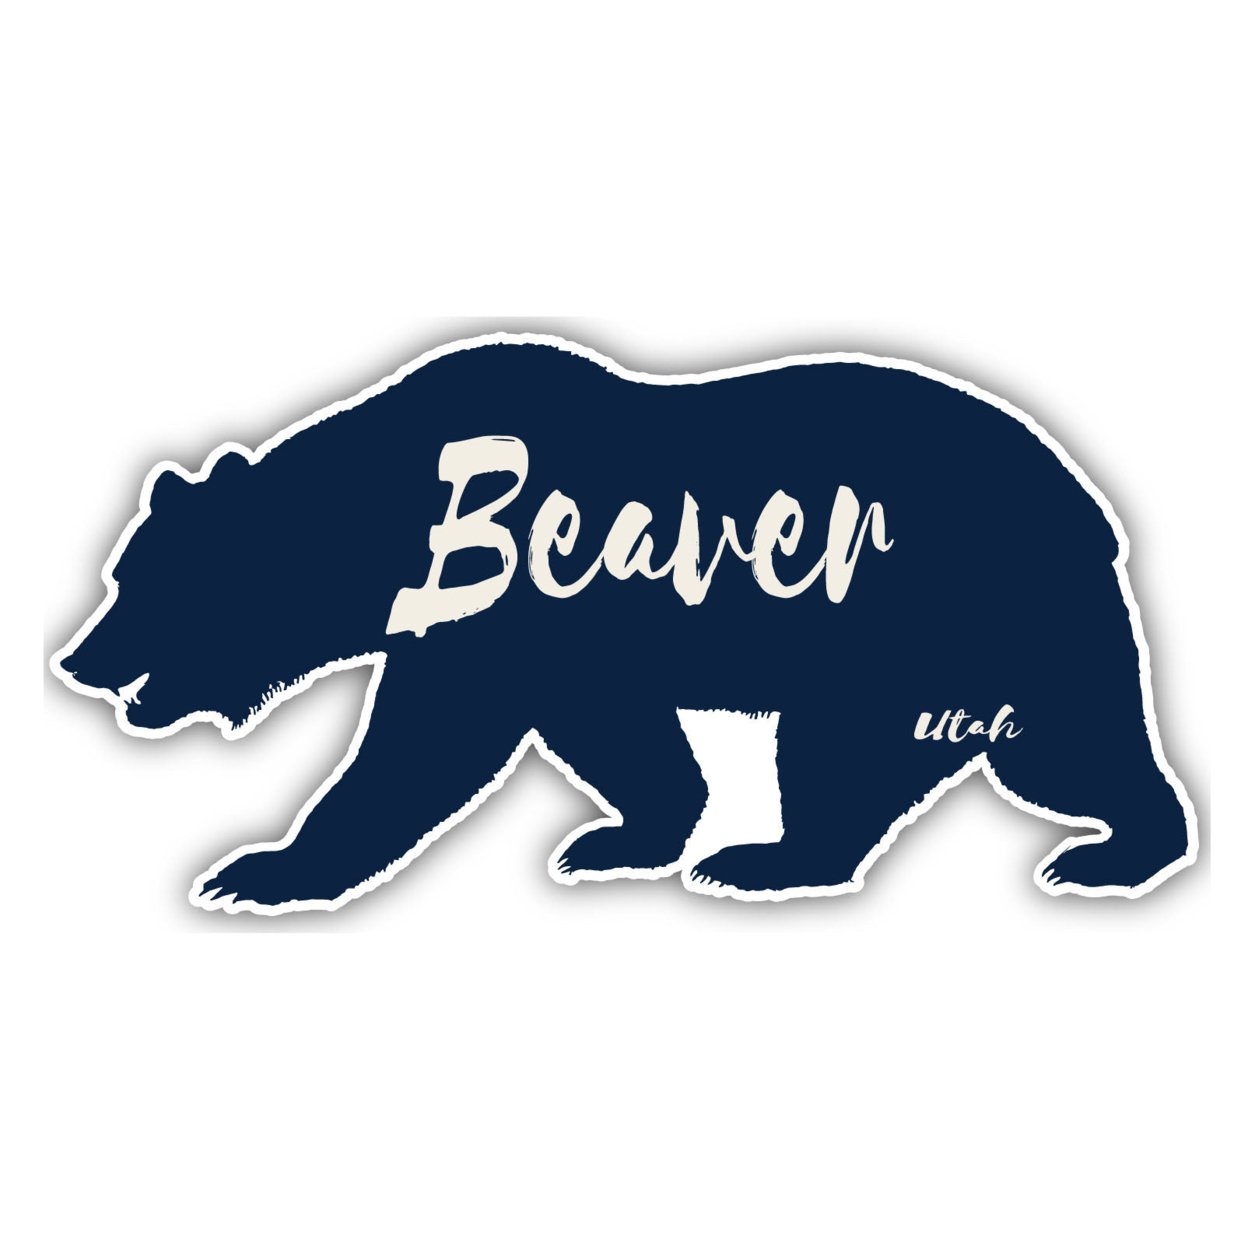 Beaver Utah Souvenir Decorative Stickers (Choose Theme And Size) - Single Unit, 12-Inch, Tent